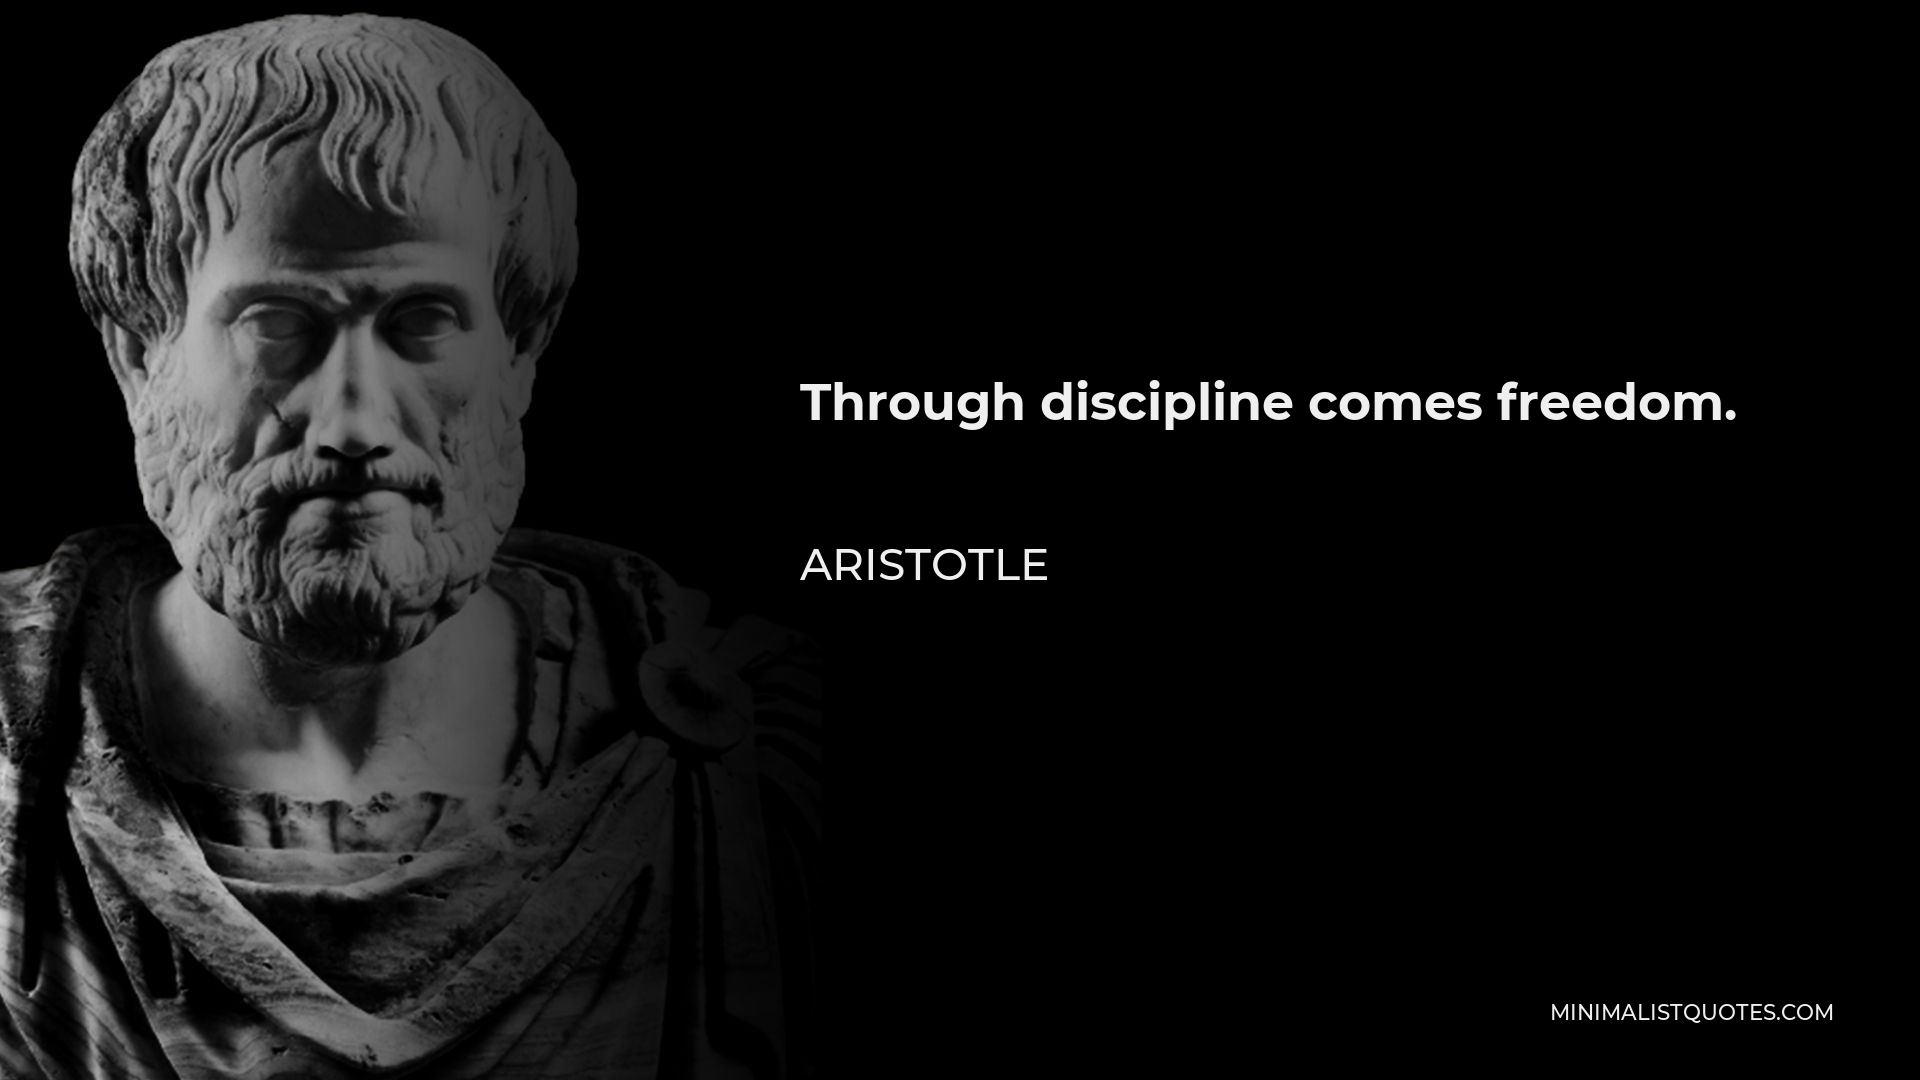 Plato  Aristotle quote lockscreen  Fotos de jacaré Citações 2pac  Fotografia de basquete